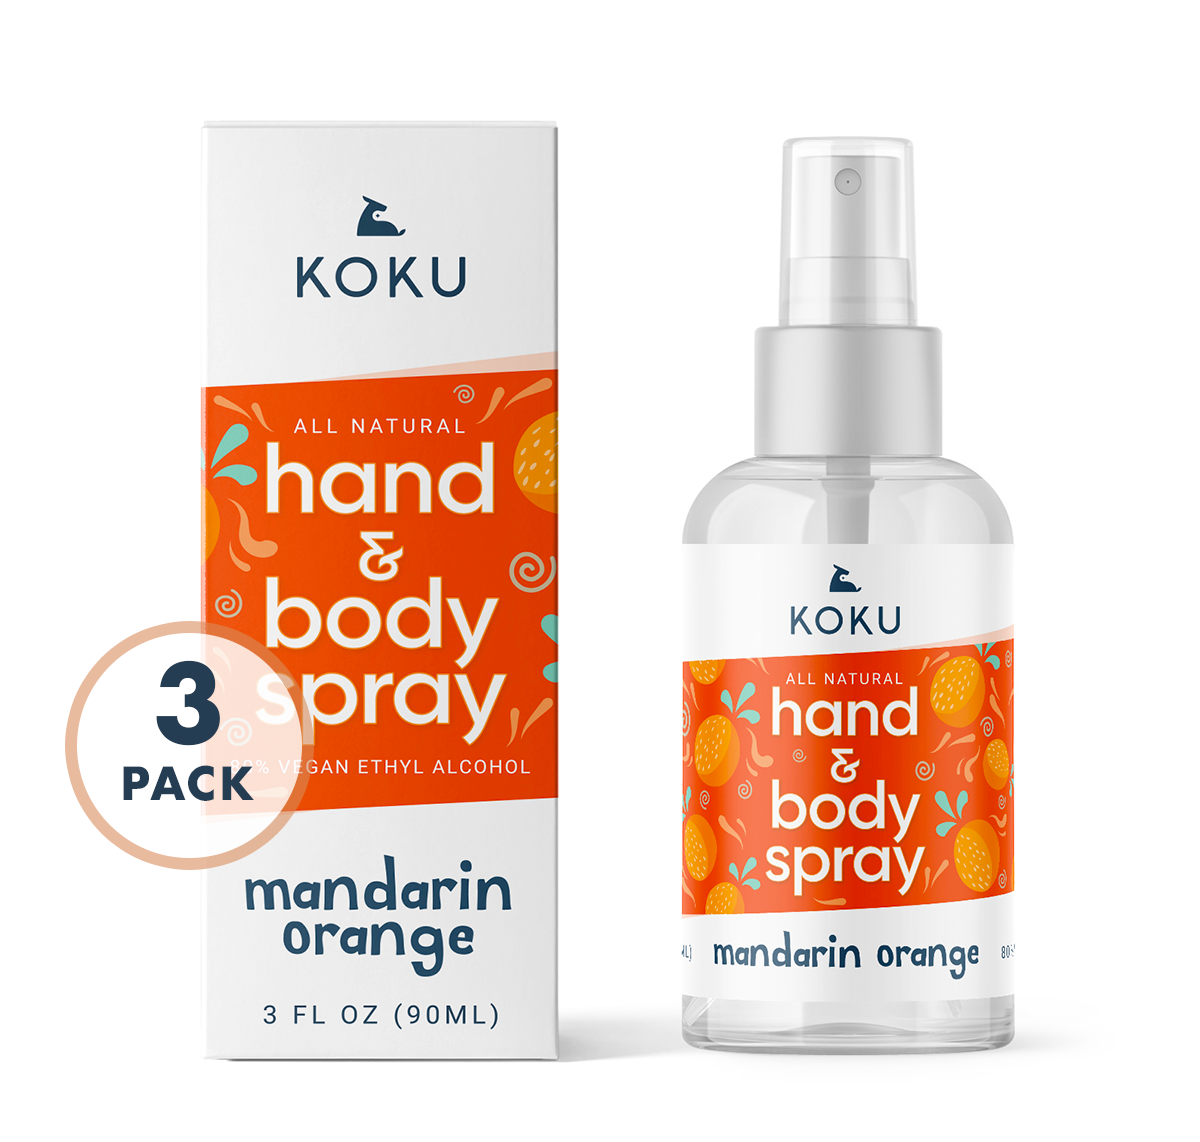 Mandarin-Orange Set 2 | Koku Pack of 3 Mandarin-Orange Hand & Body Spray 3x3 fl oz | 3x MINI MANDARIN-ORANGE PACK